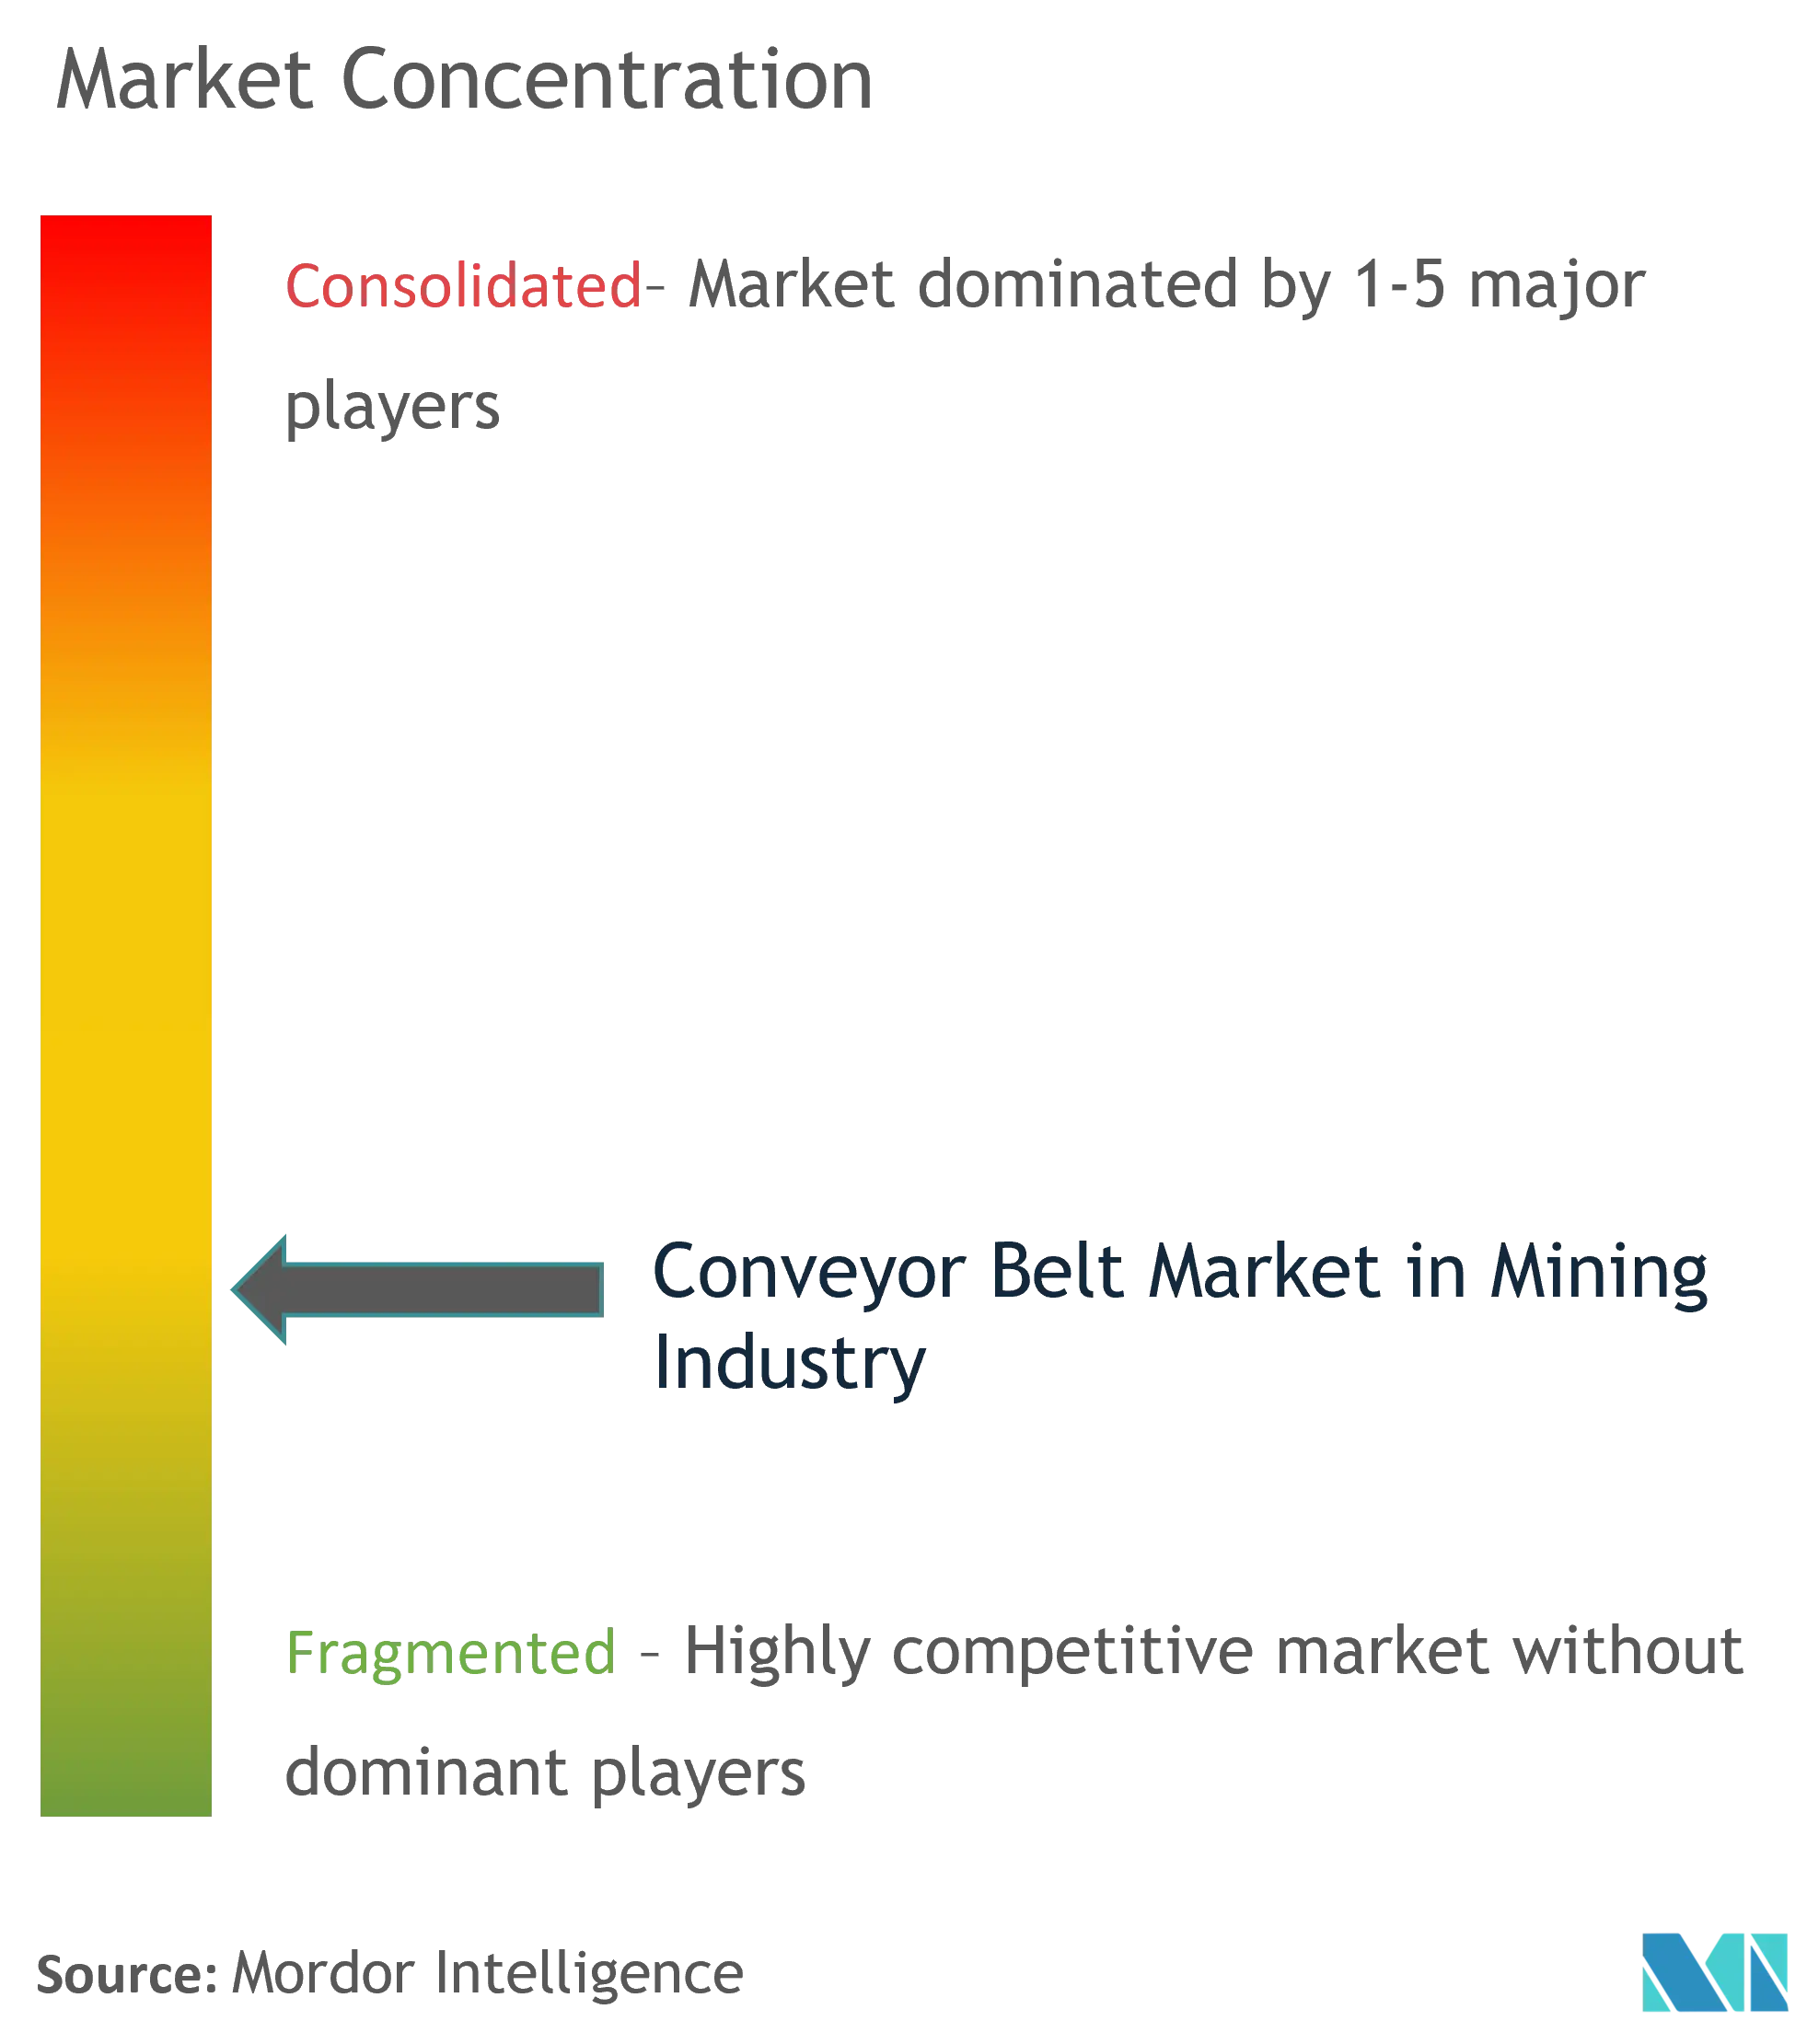 Conveyor Belt Market in Mining Industry Concentration